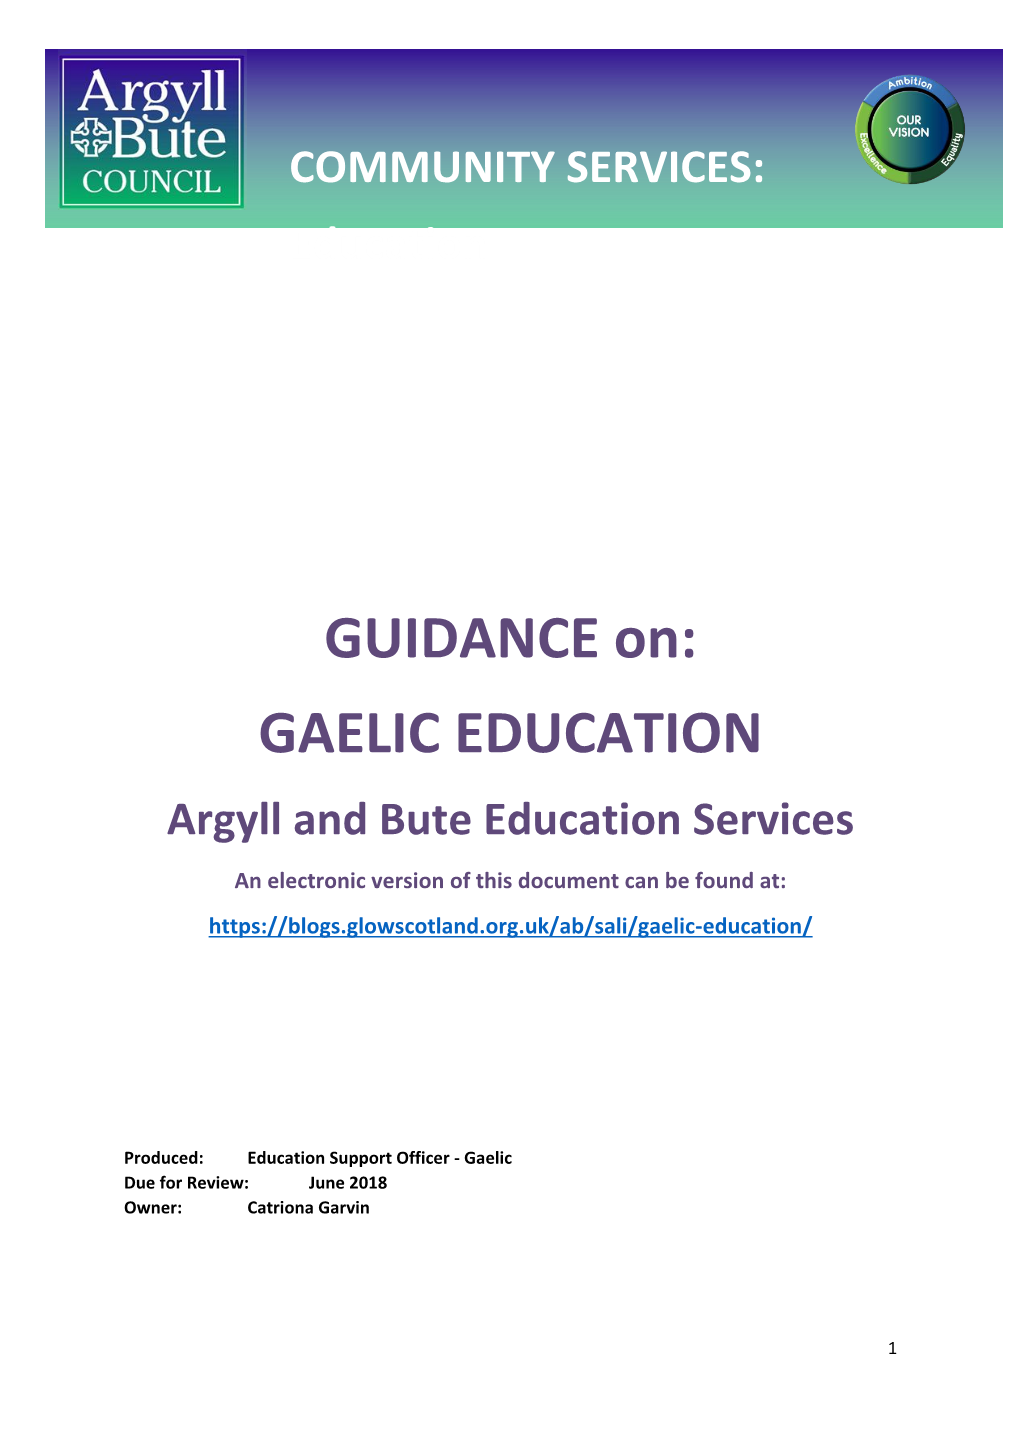 GUI GUIDANCE On: GAELIC EDUCATION